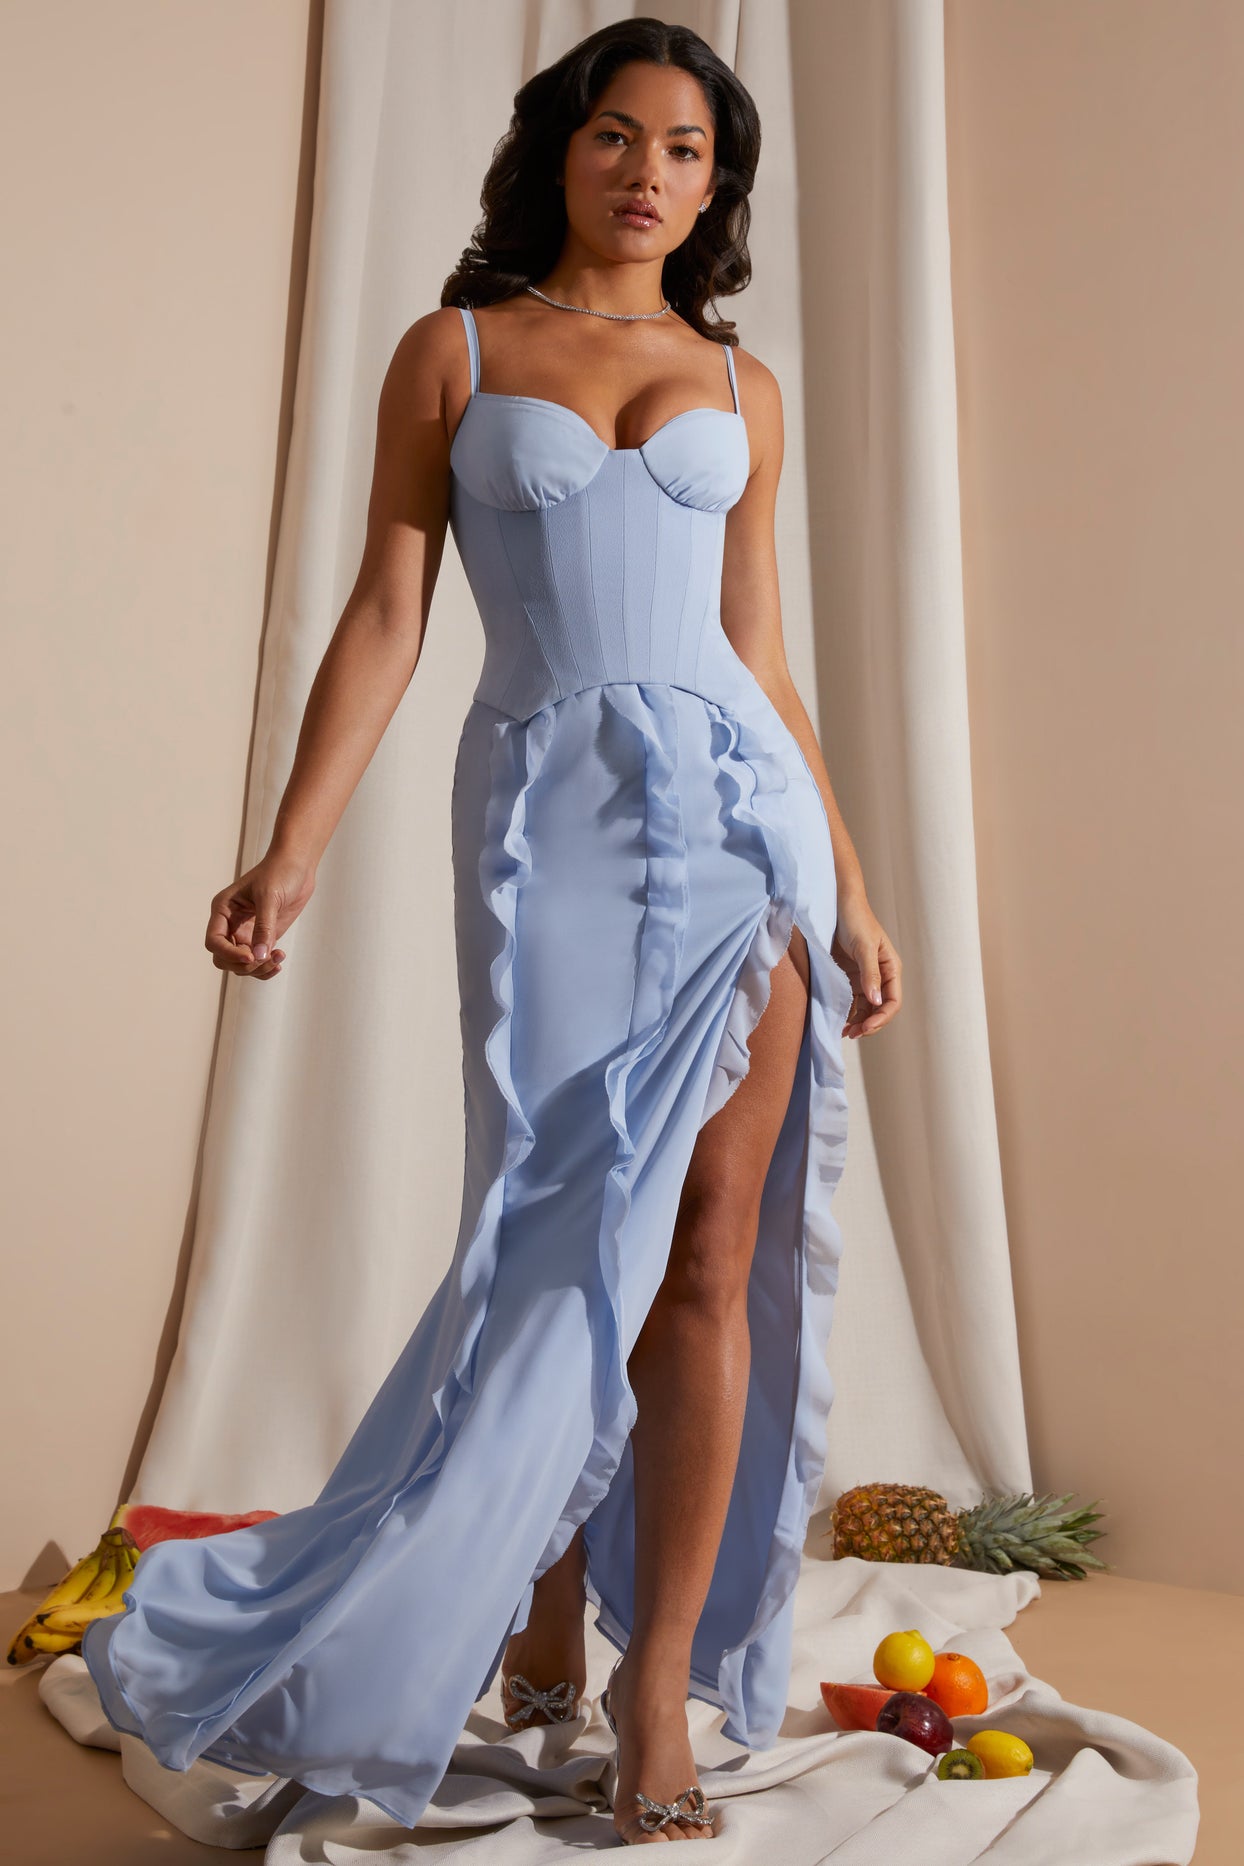 backless corset - Google Search  Ball dresses, Fashion, Corset style